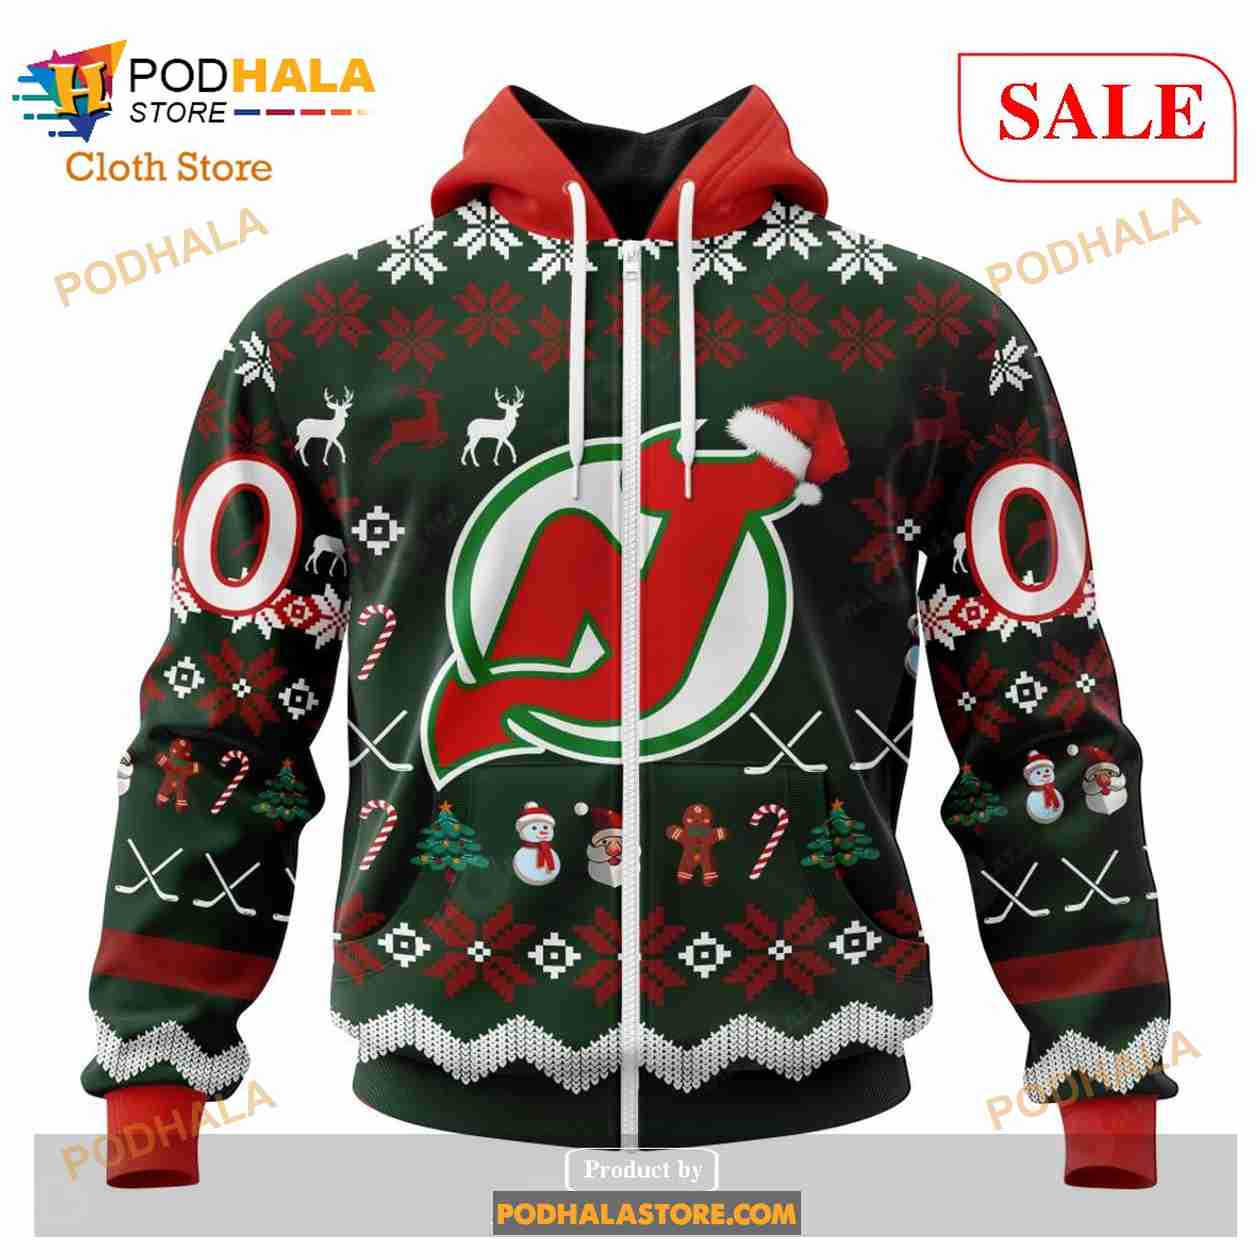 Crying humbug on hockey's ugly Christmas sweater jerseys